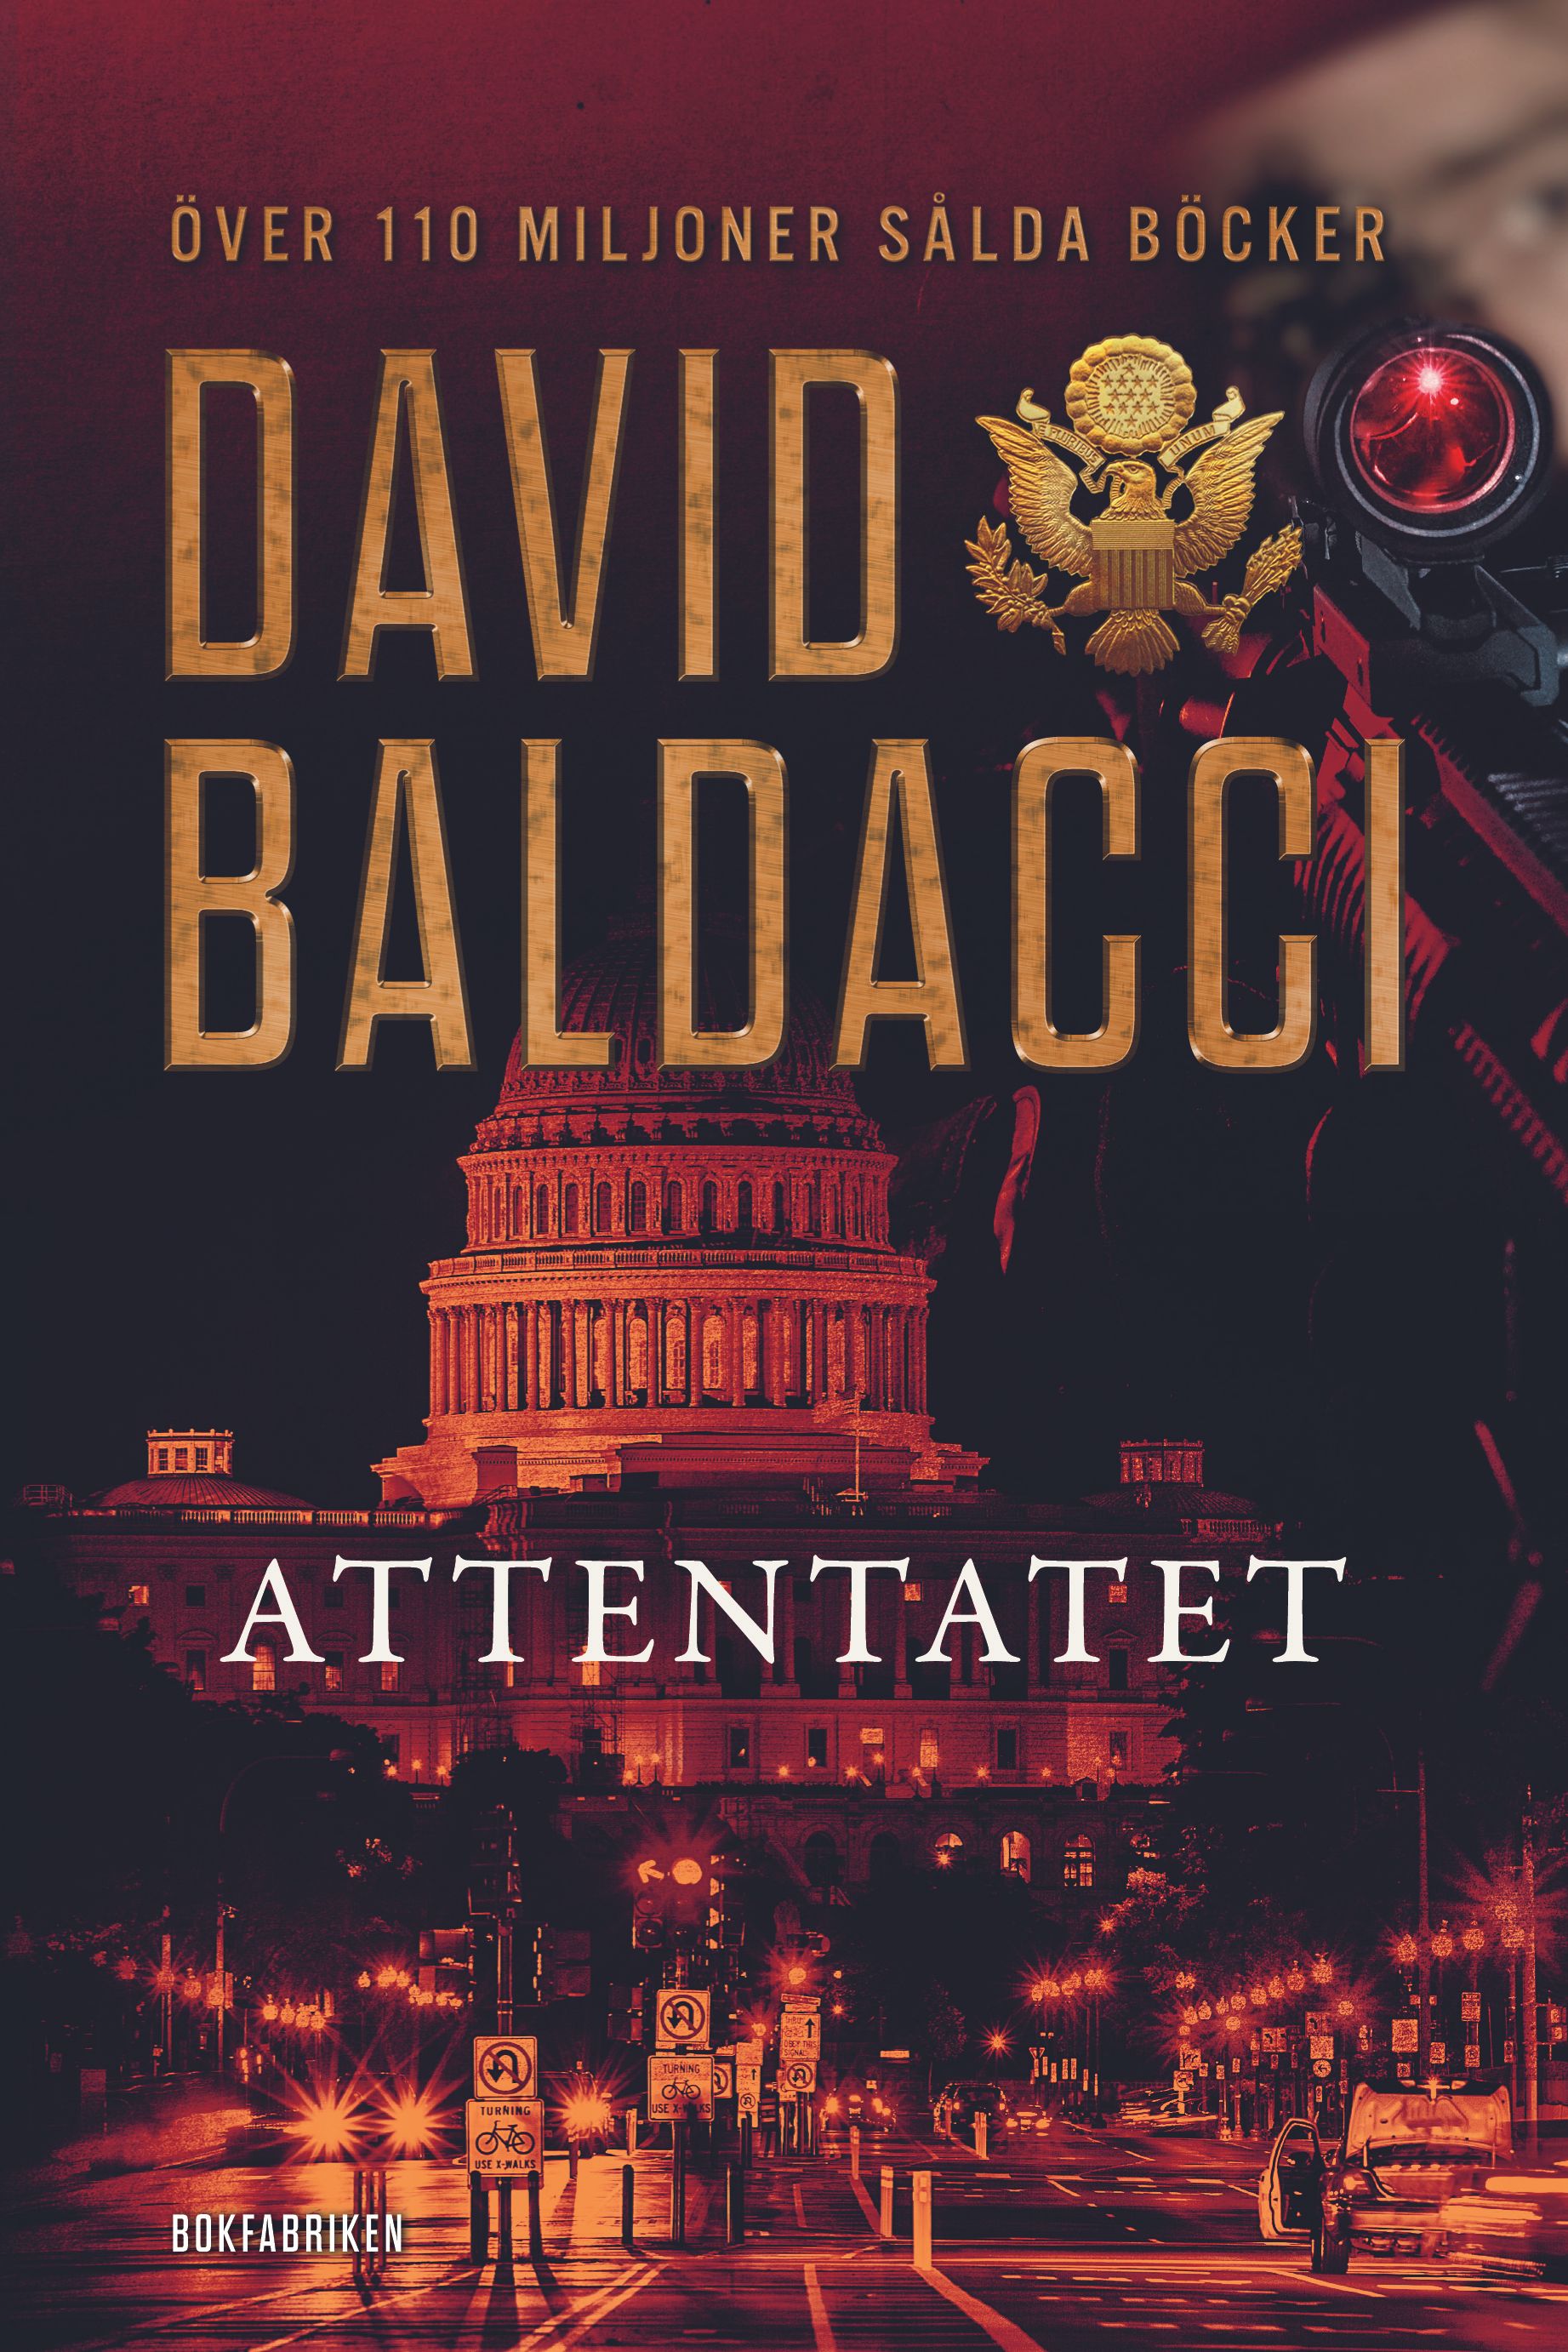 Attentatet, eBook by David Baldacci